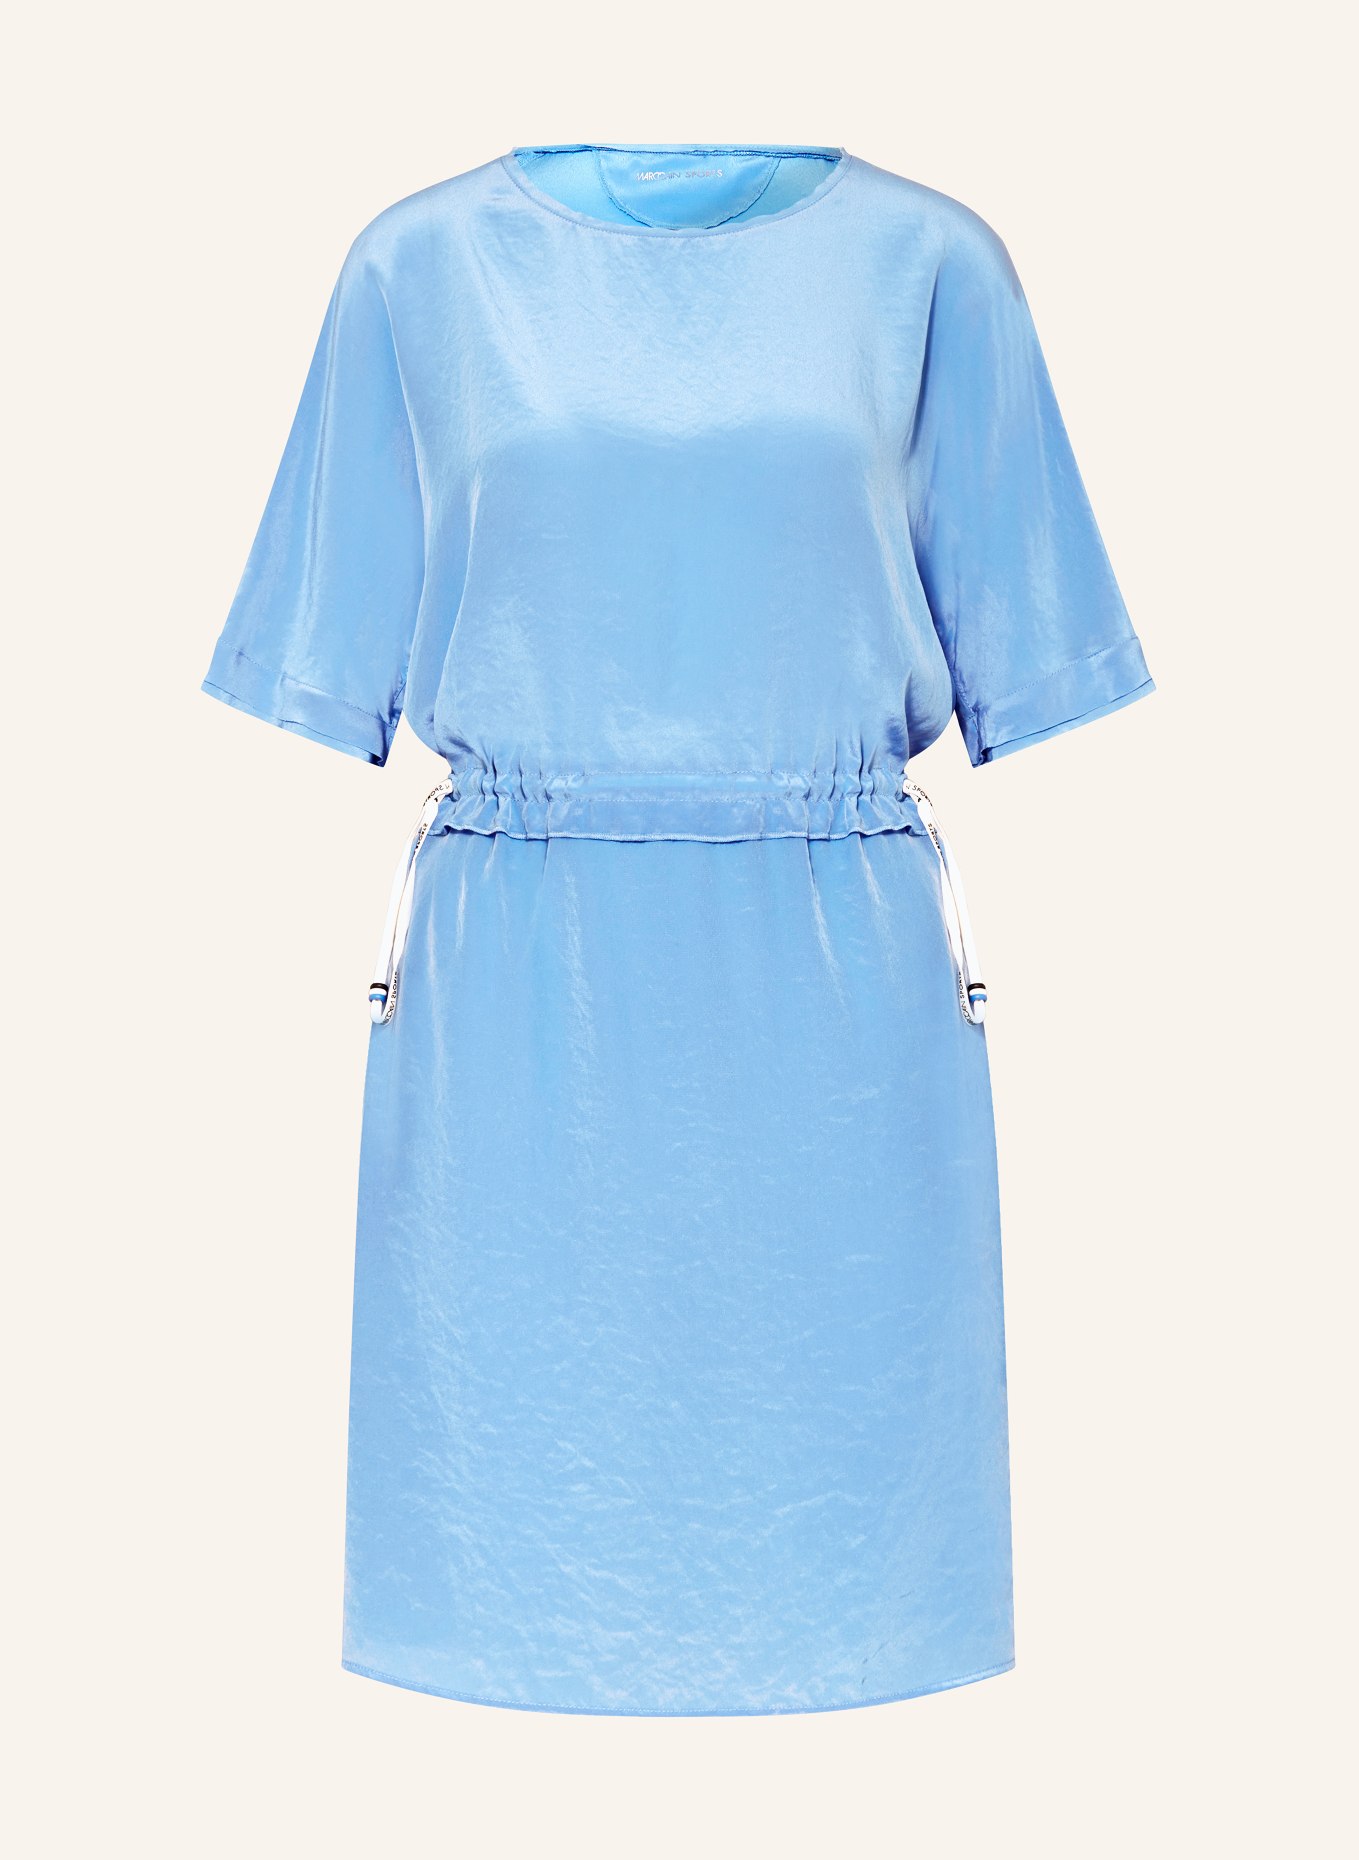 MARC CAIN Kleid, Farbe: 363 bright azure (Bild 1)